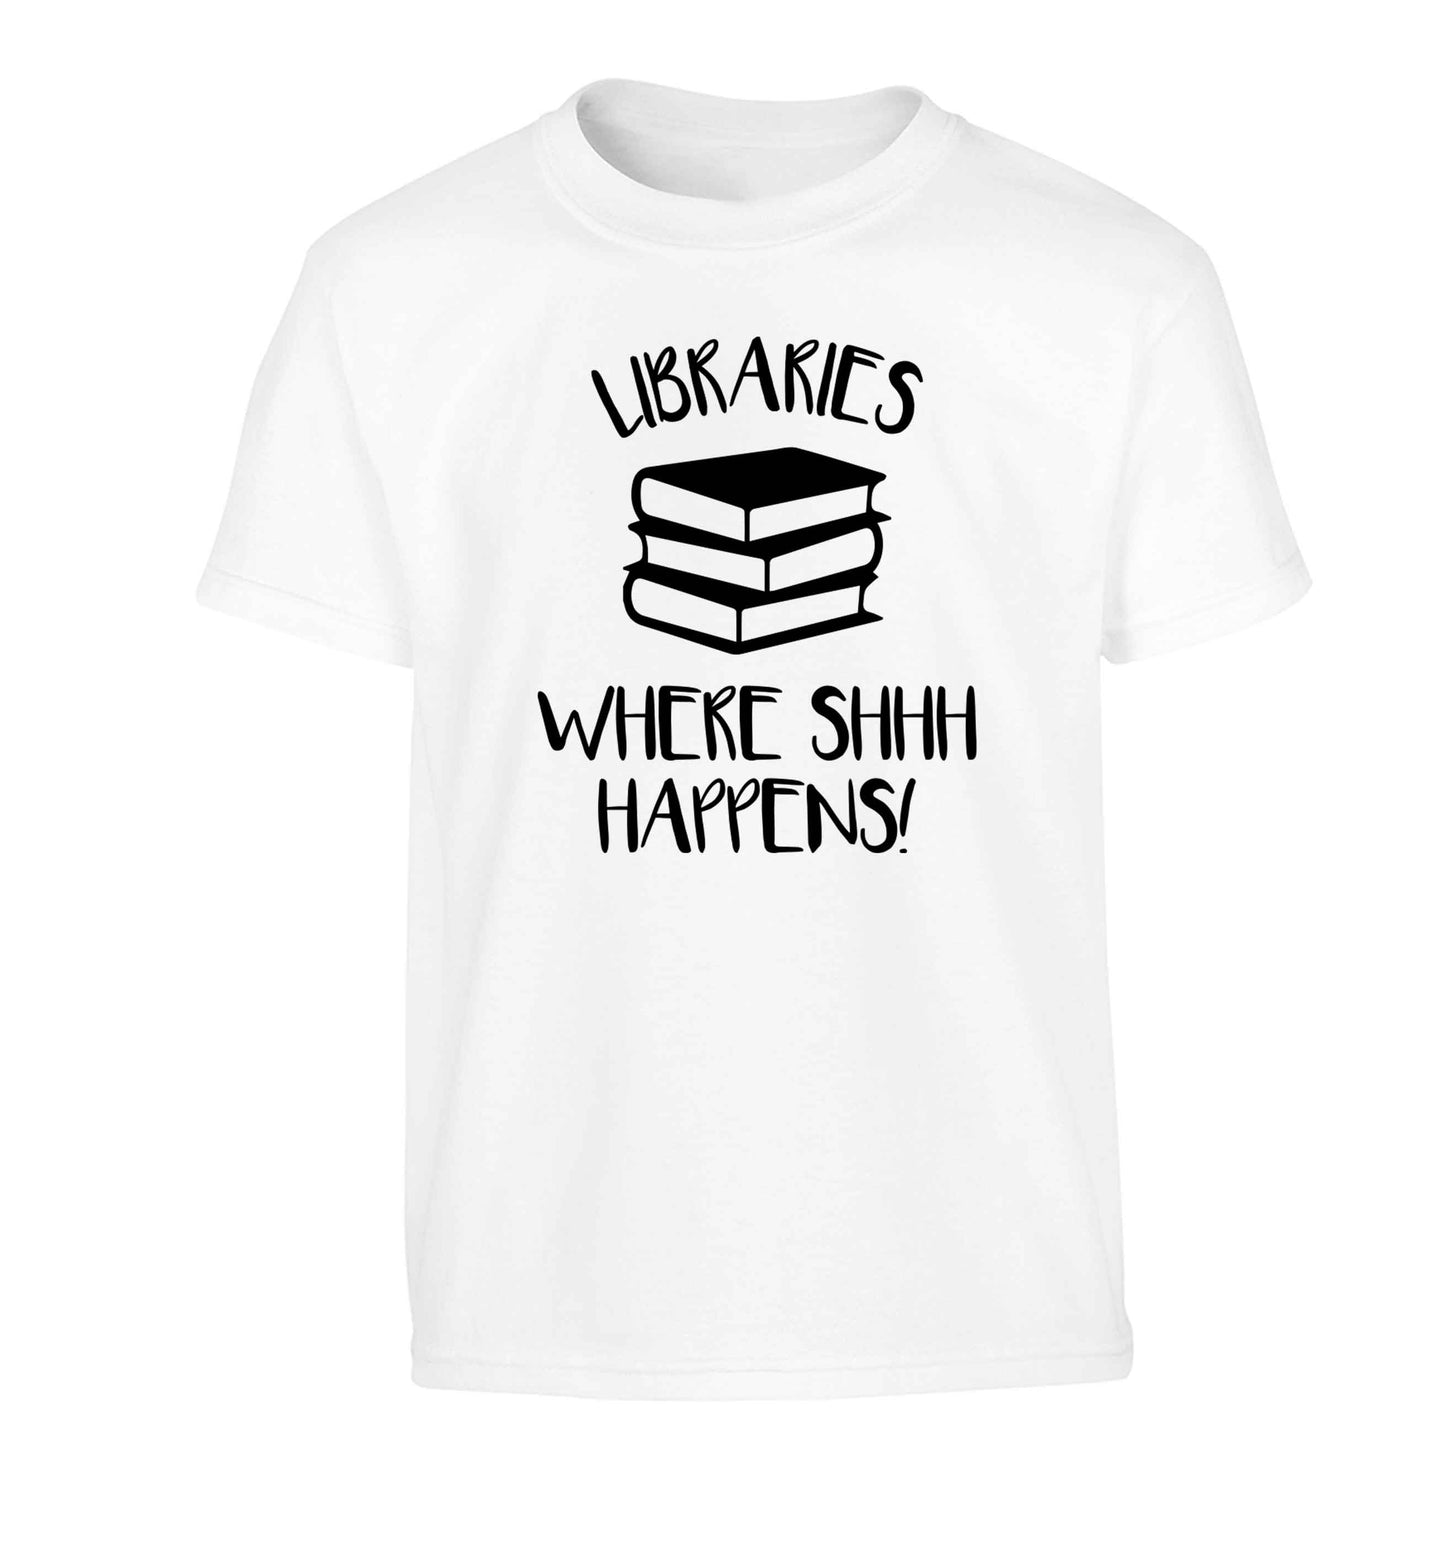 Libraries where shh happens! Children's white Tshirt 12-13 Years